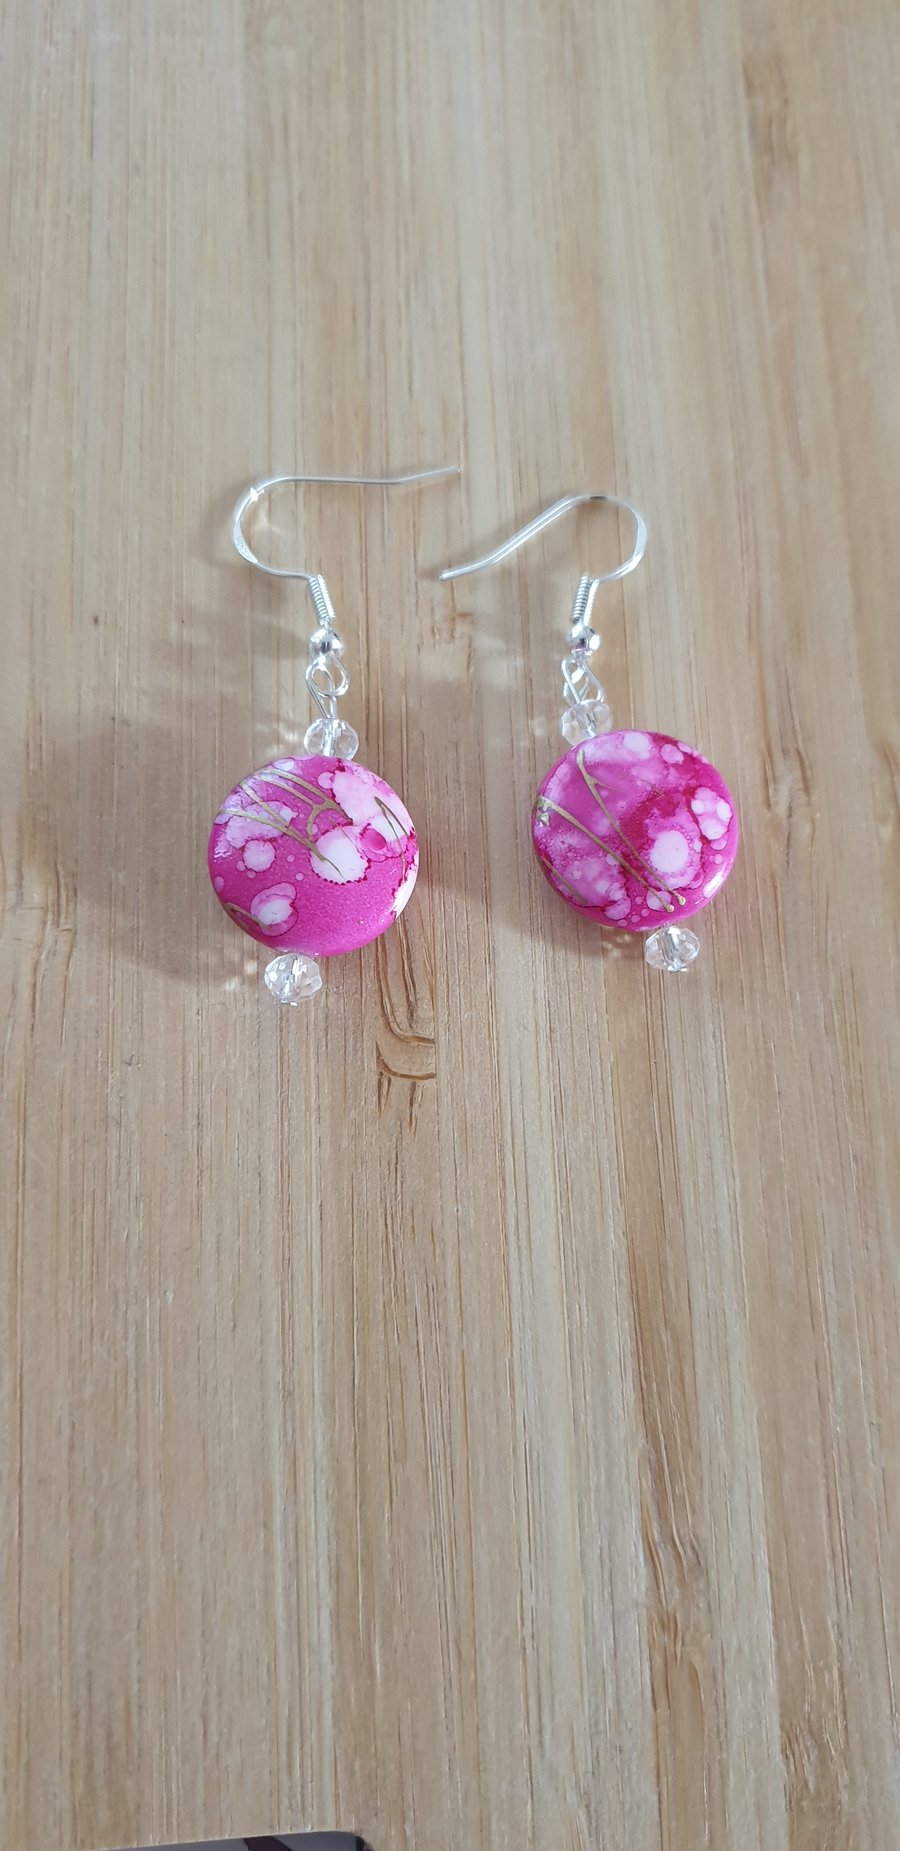 Pink round earrings